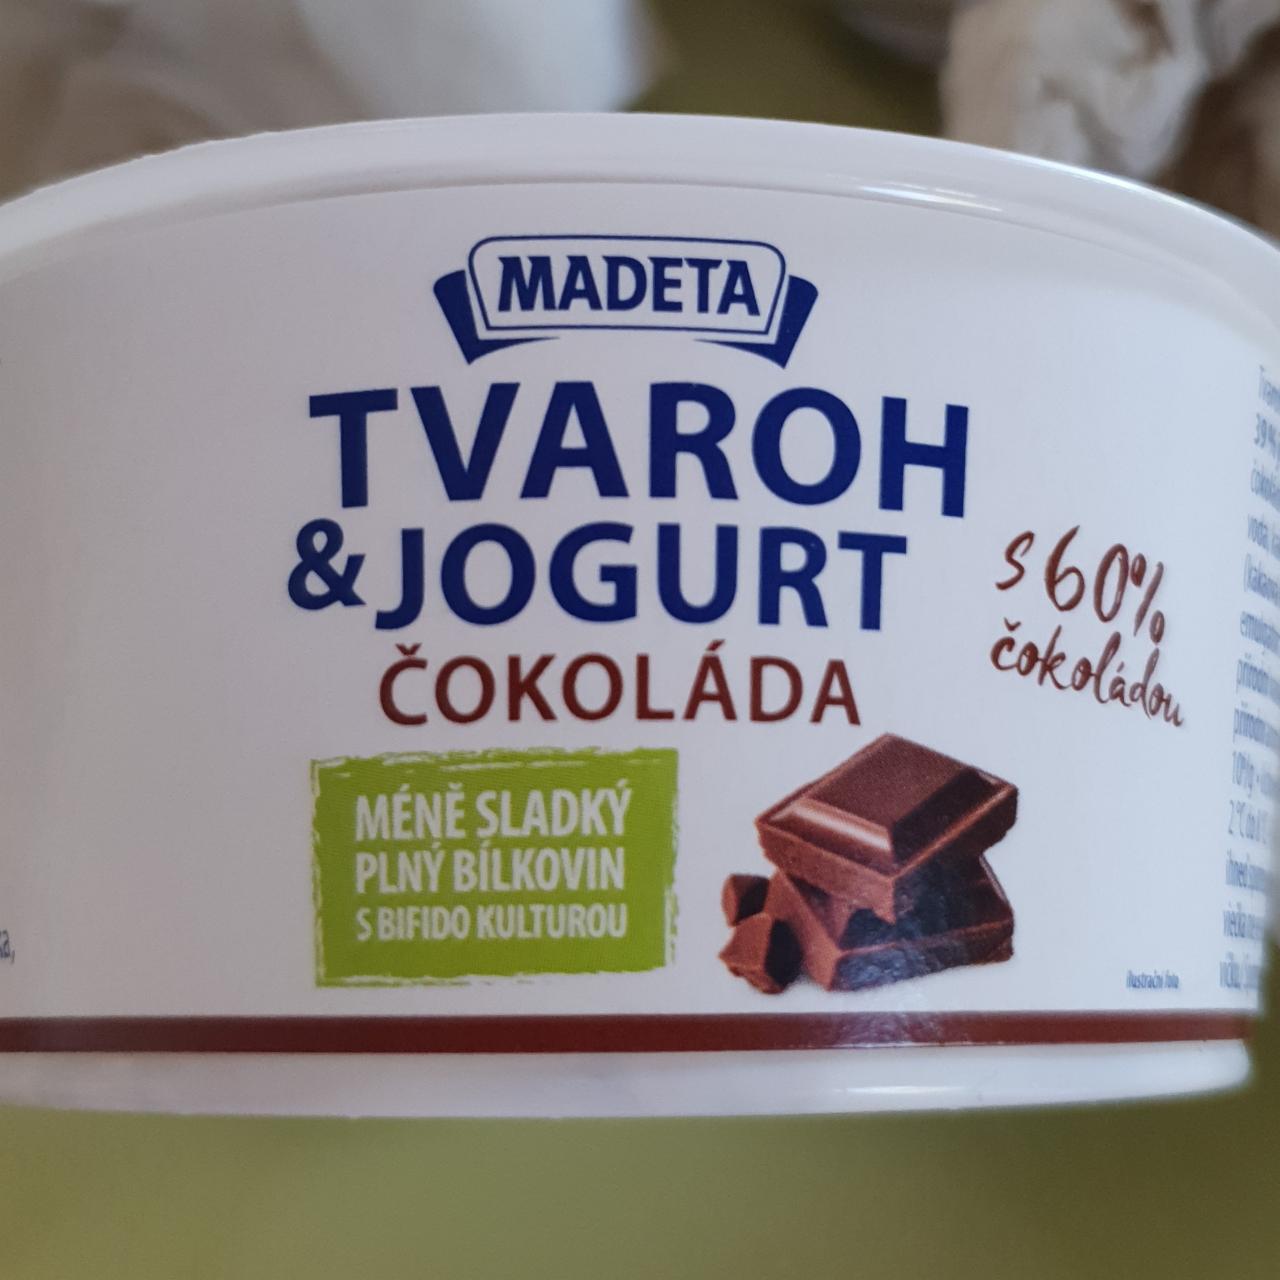 Фото - творог с йогуртом со вкусом шоколада jihočesky tvaroh Madeta